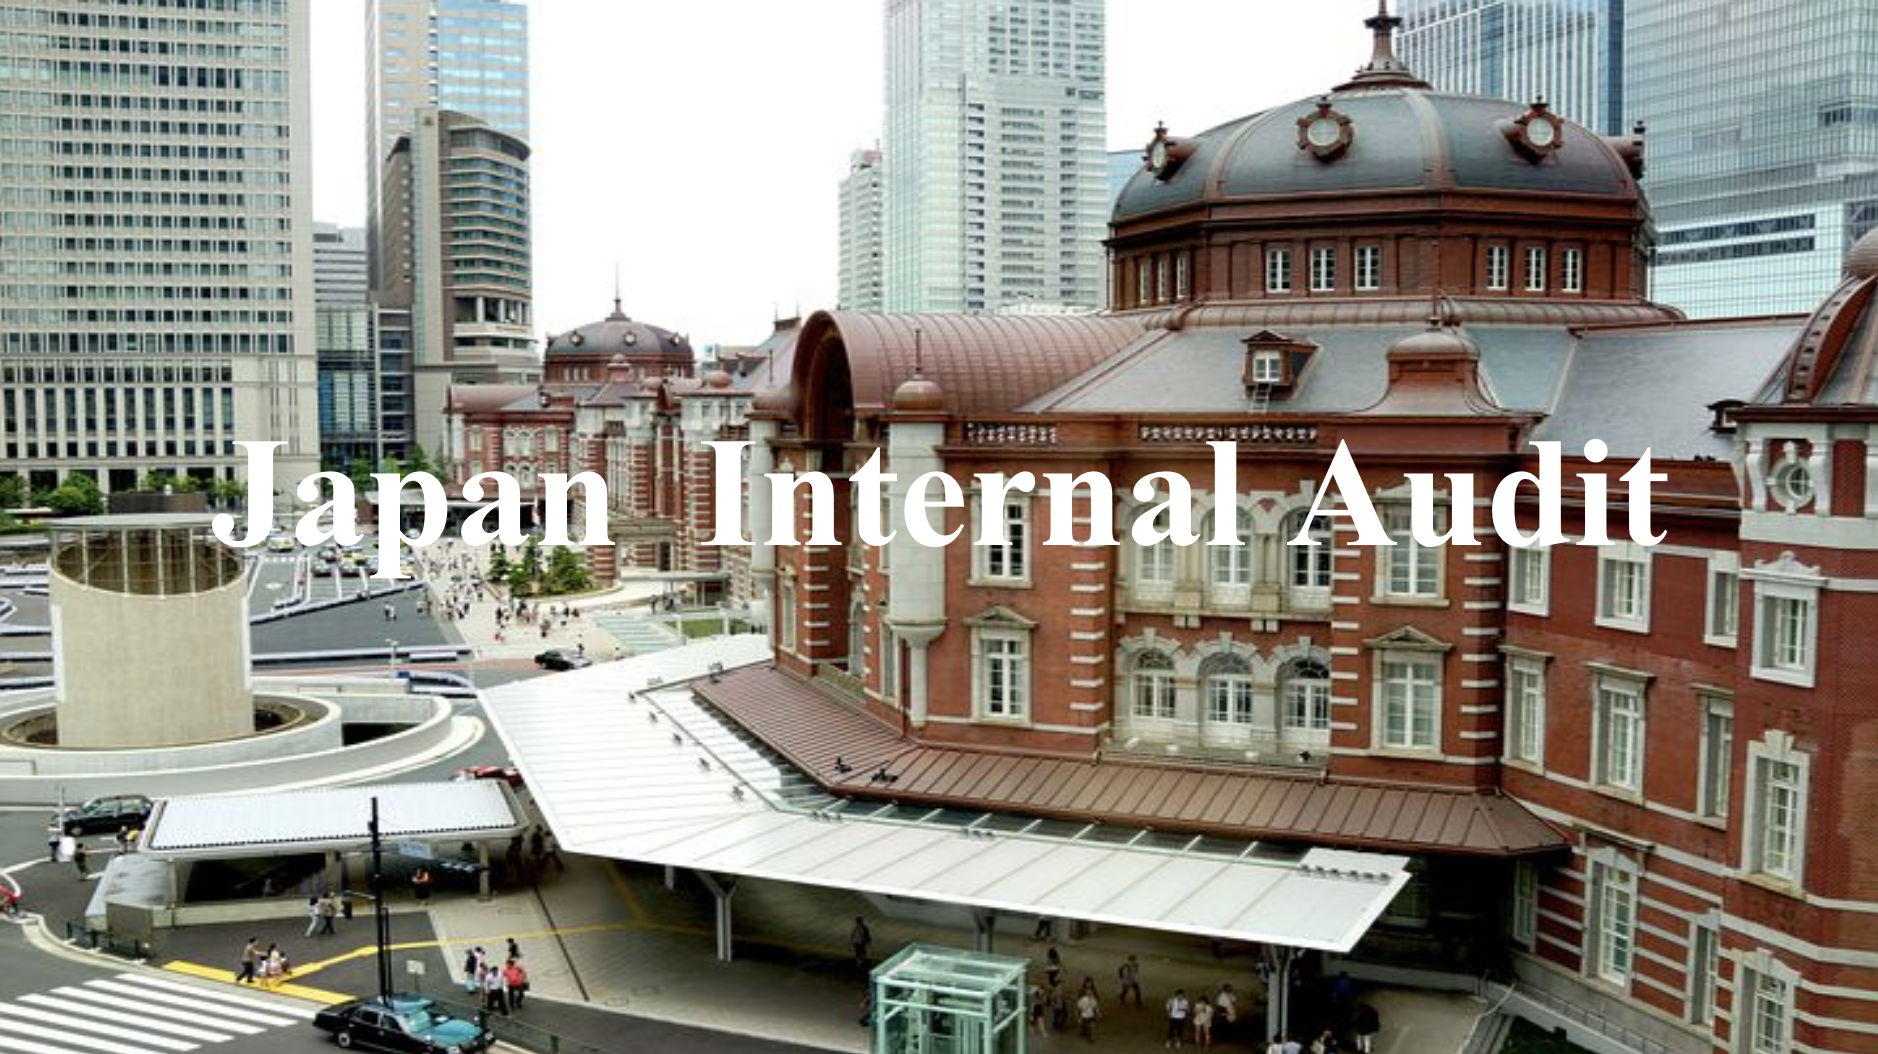 Japan Internal Audit